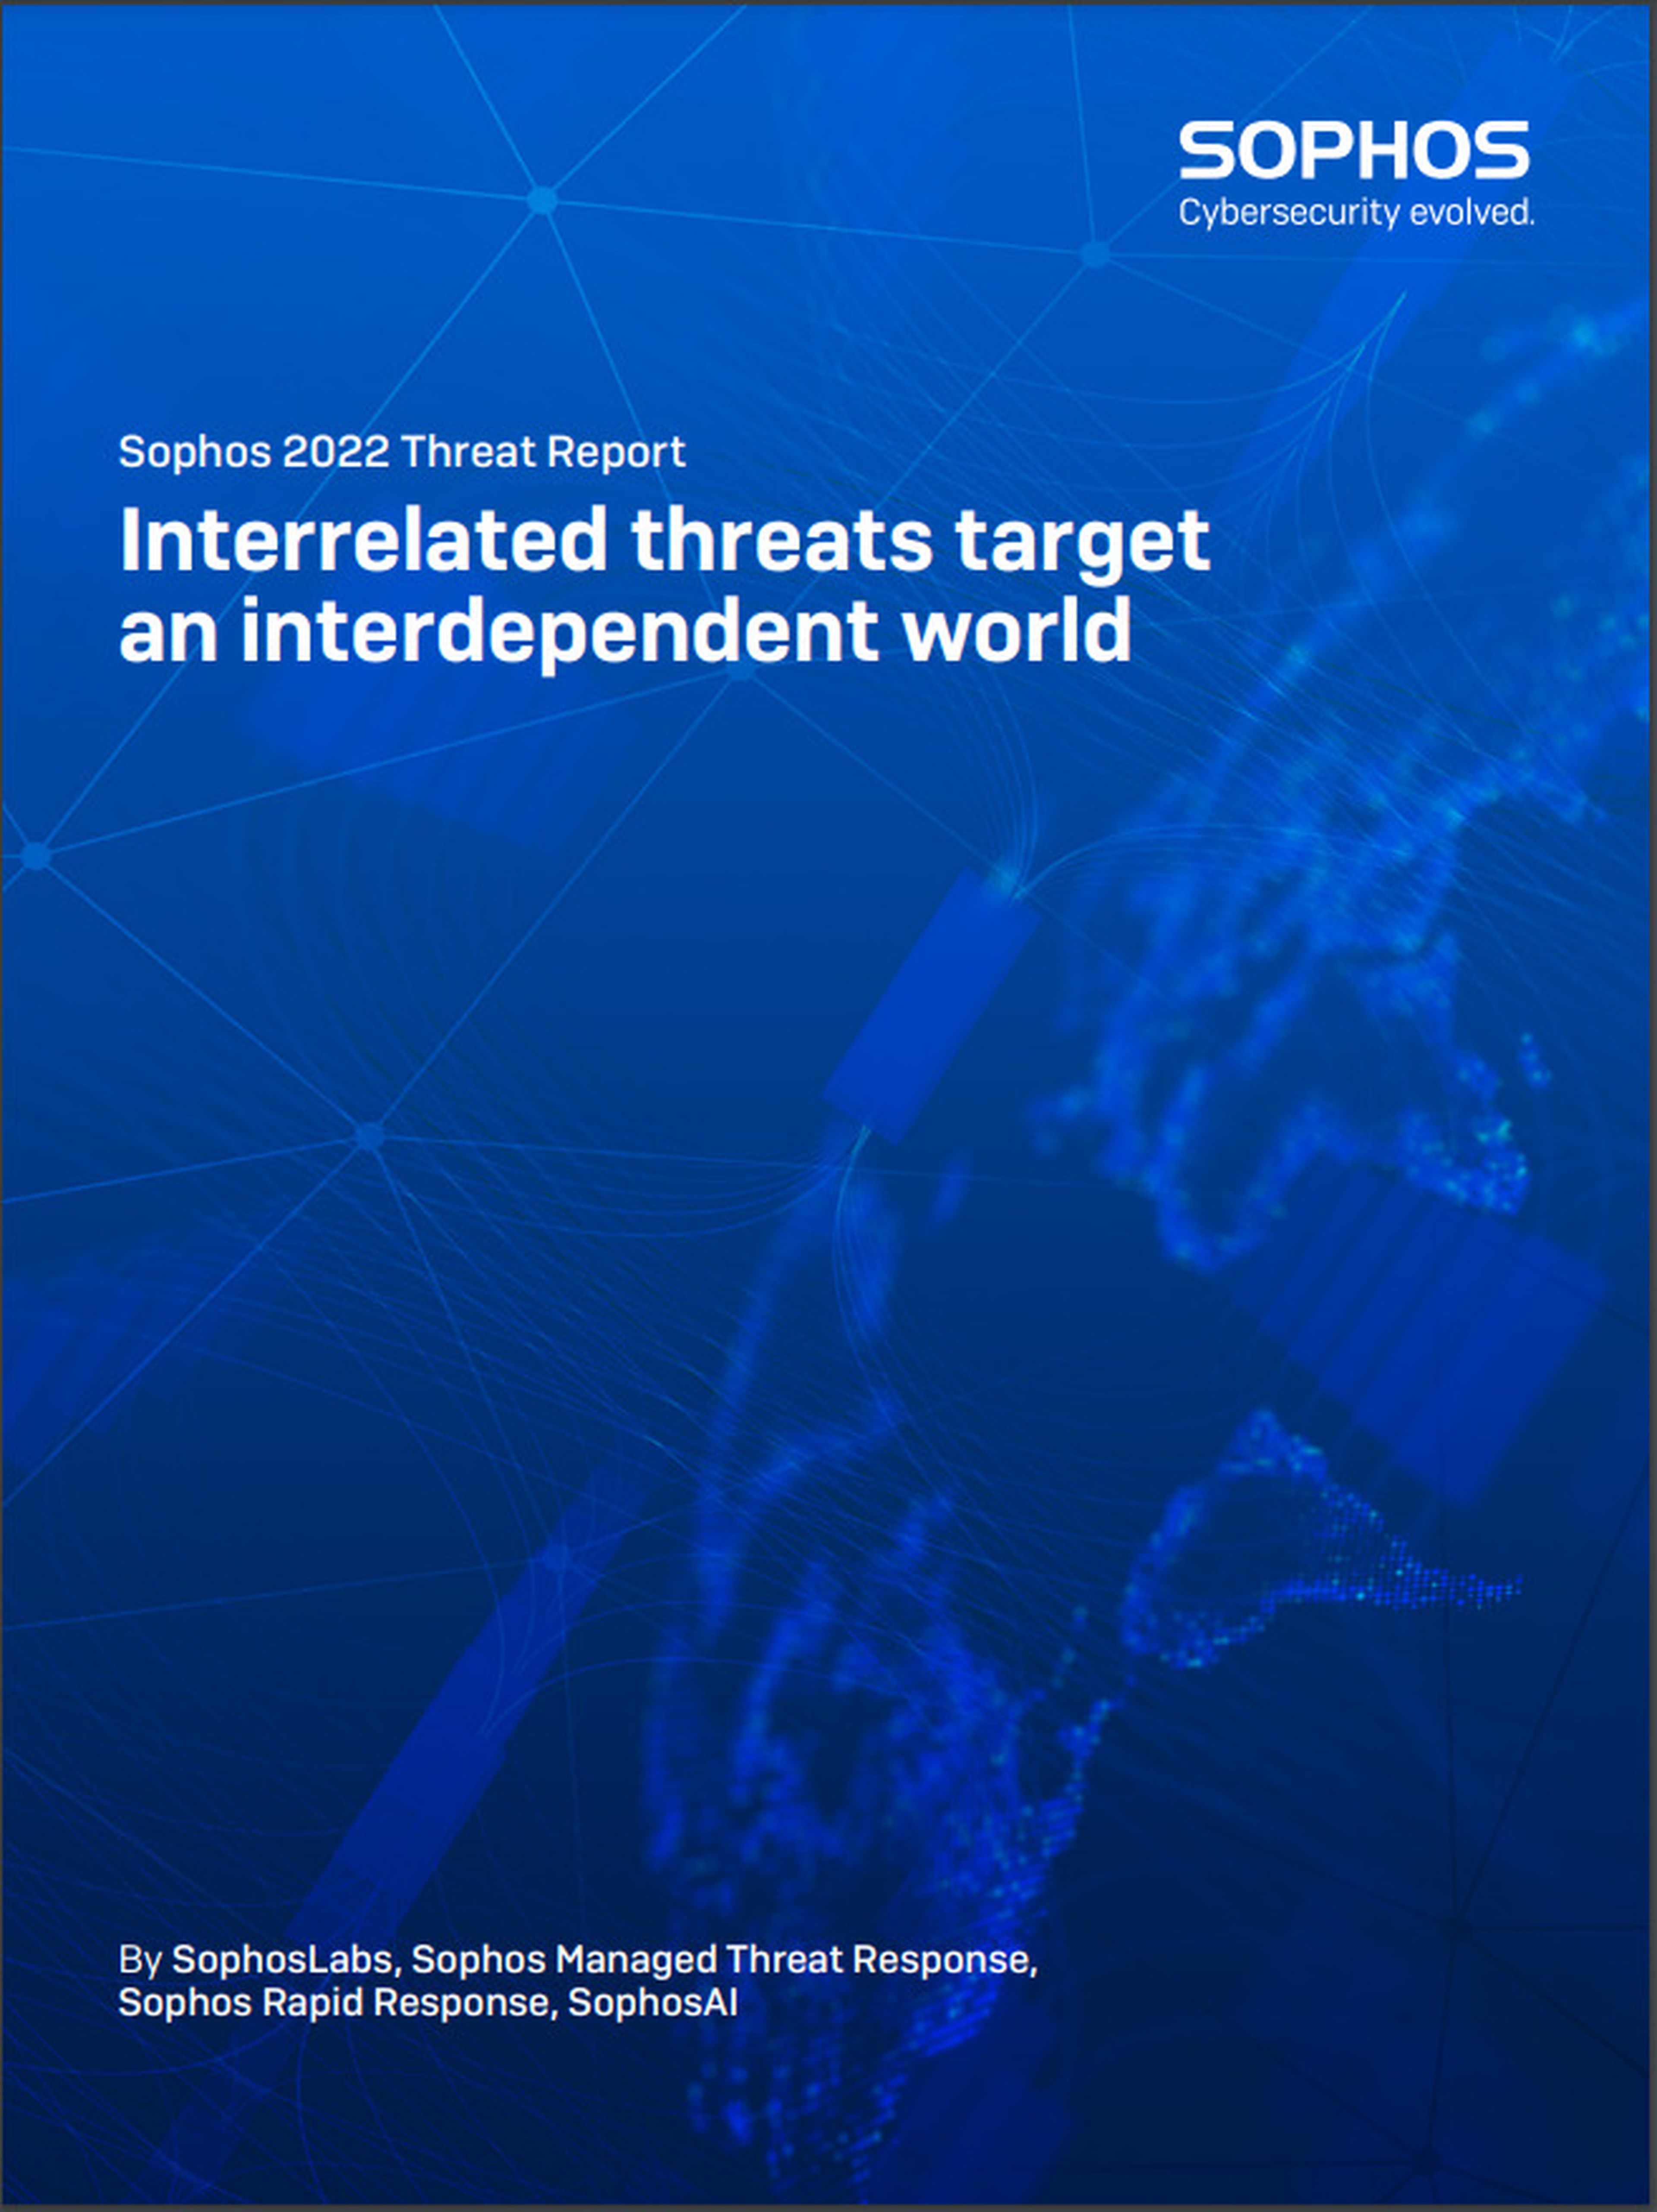 Sophos 2022 Threat Report: Interrelated threats target an interdependent world